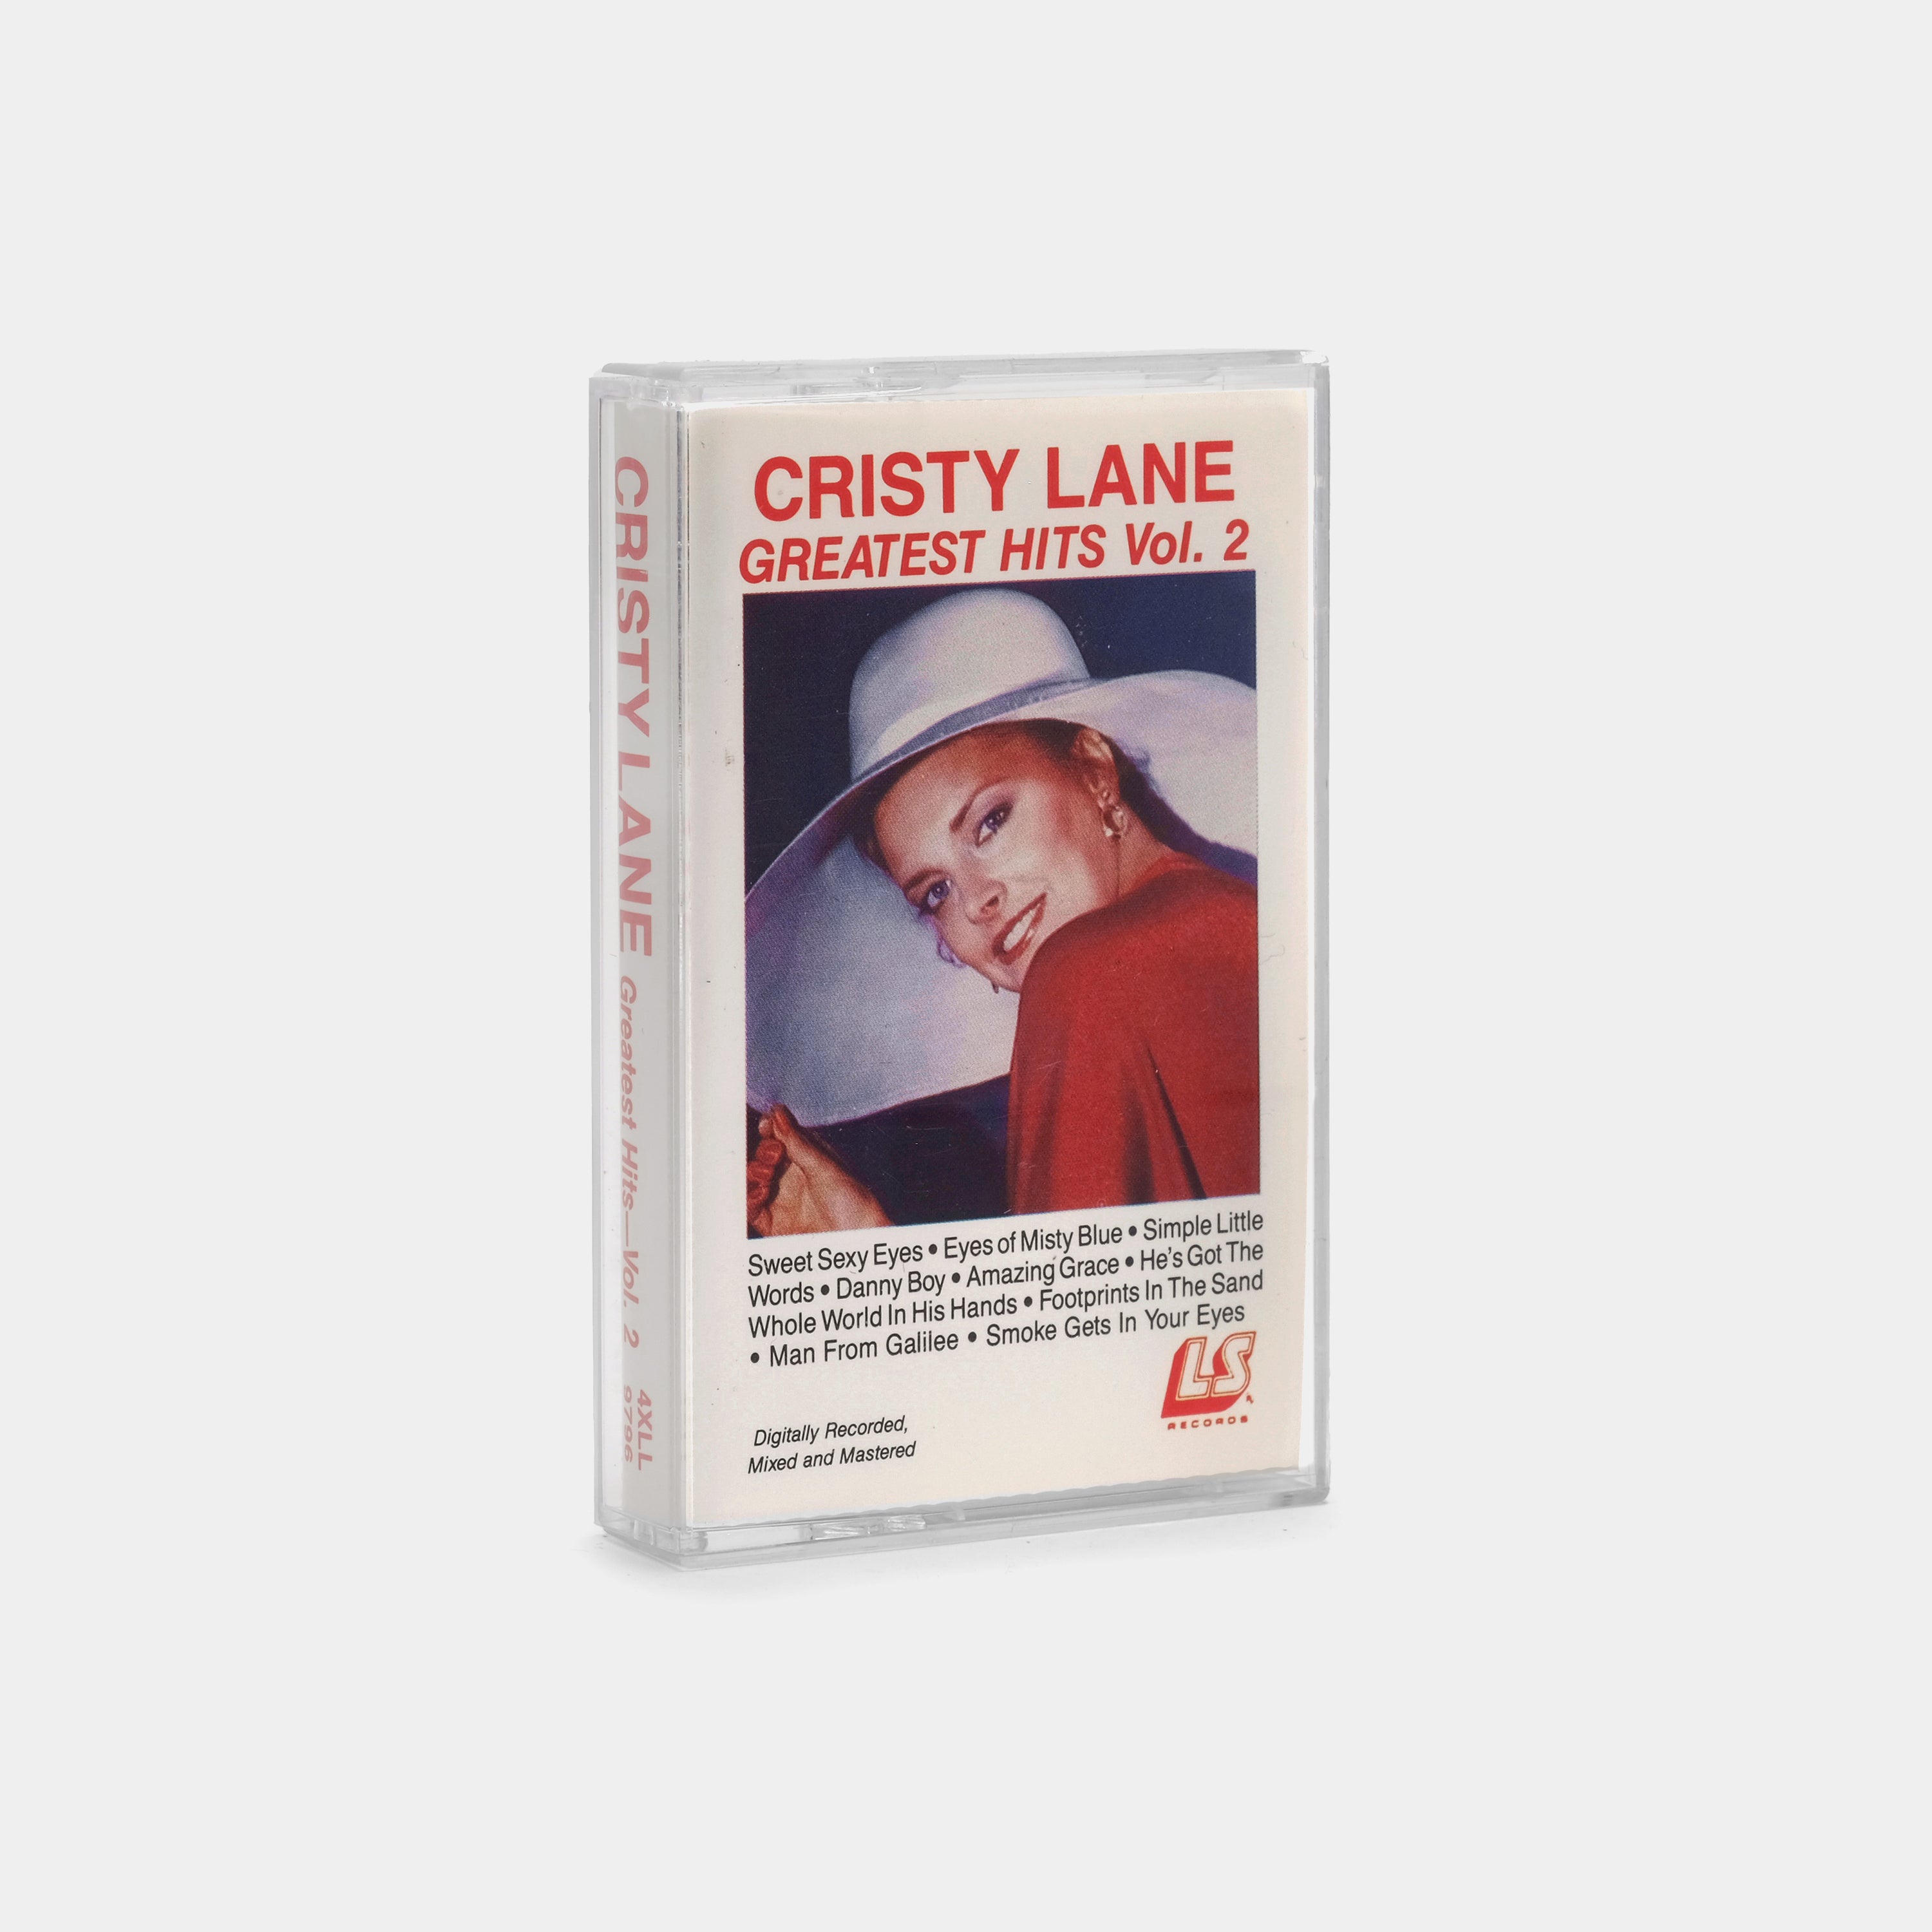 Cristy Lane - Greatest Hits Vol 2 Cassette Tape